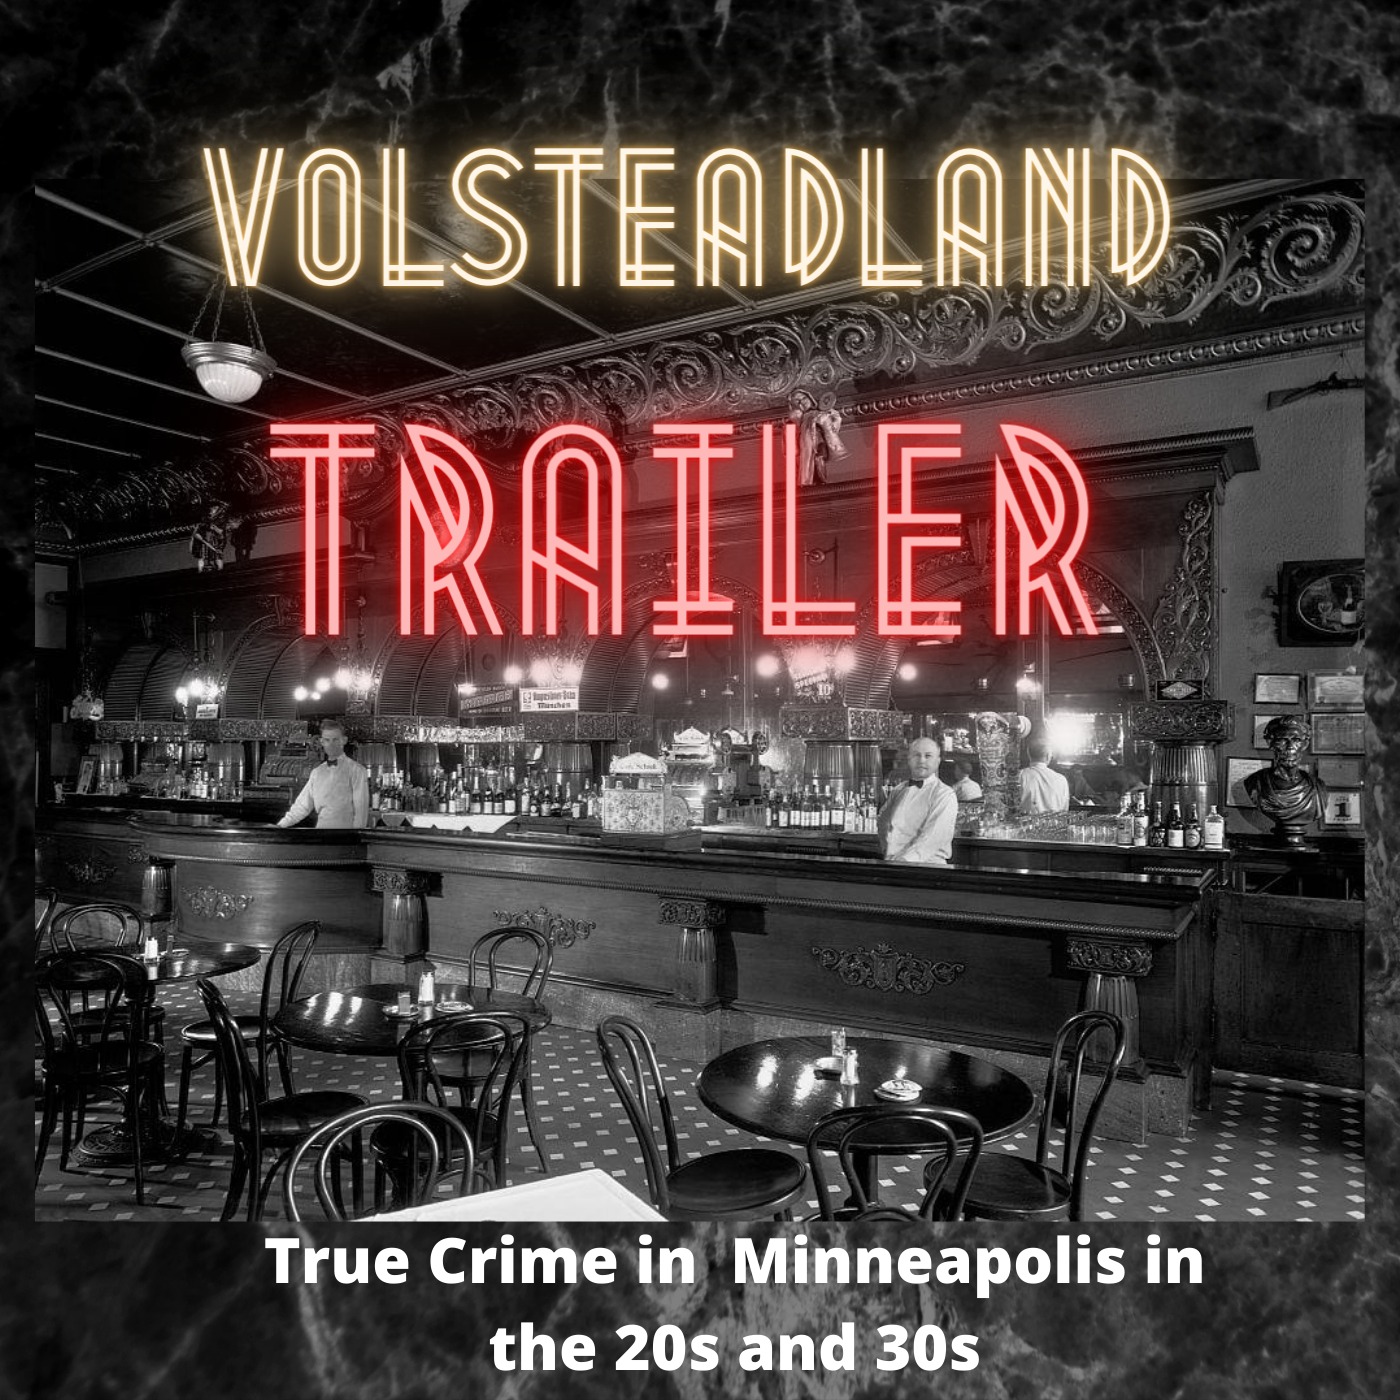 Volsteadland: Teaser trailer